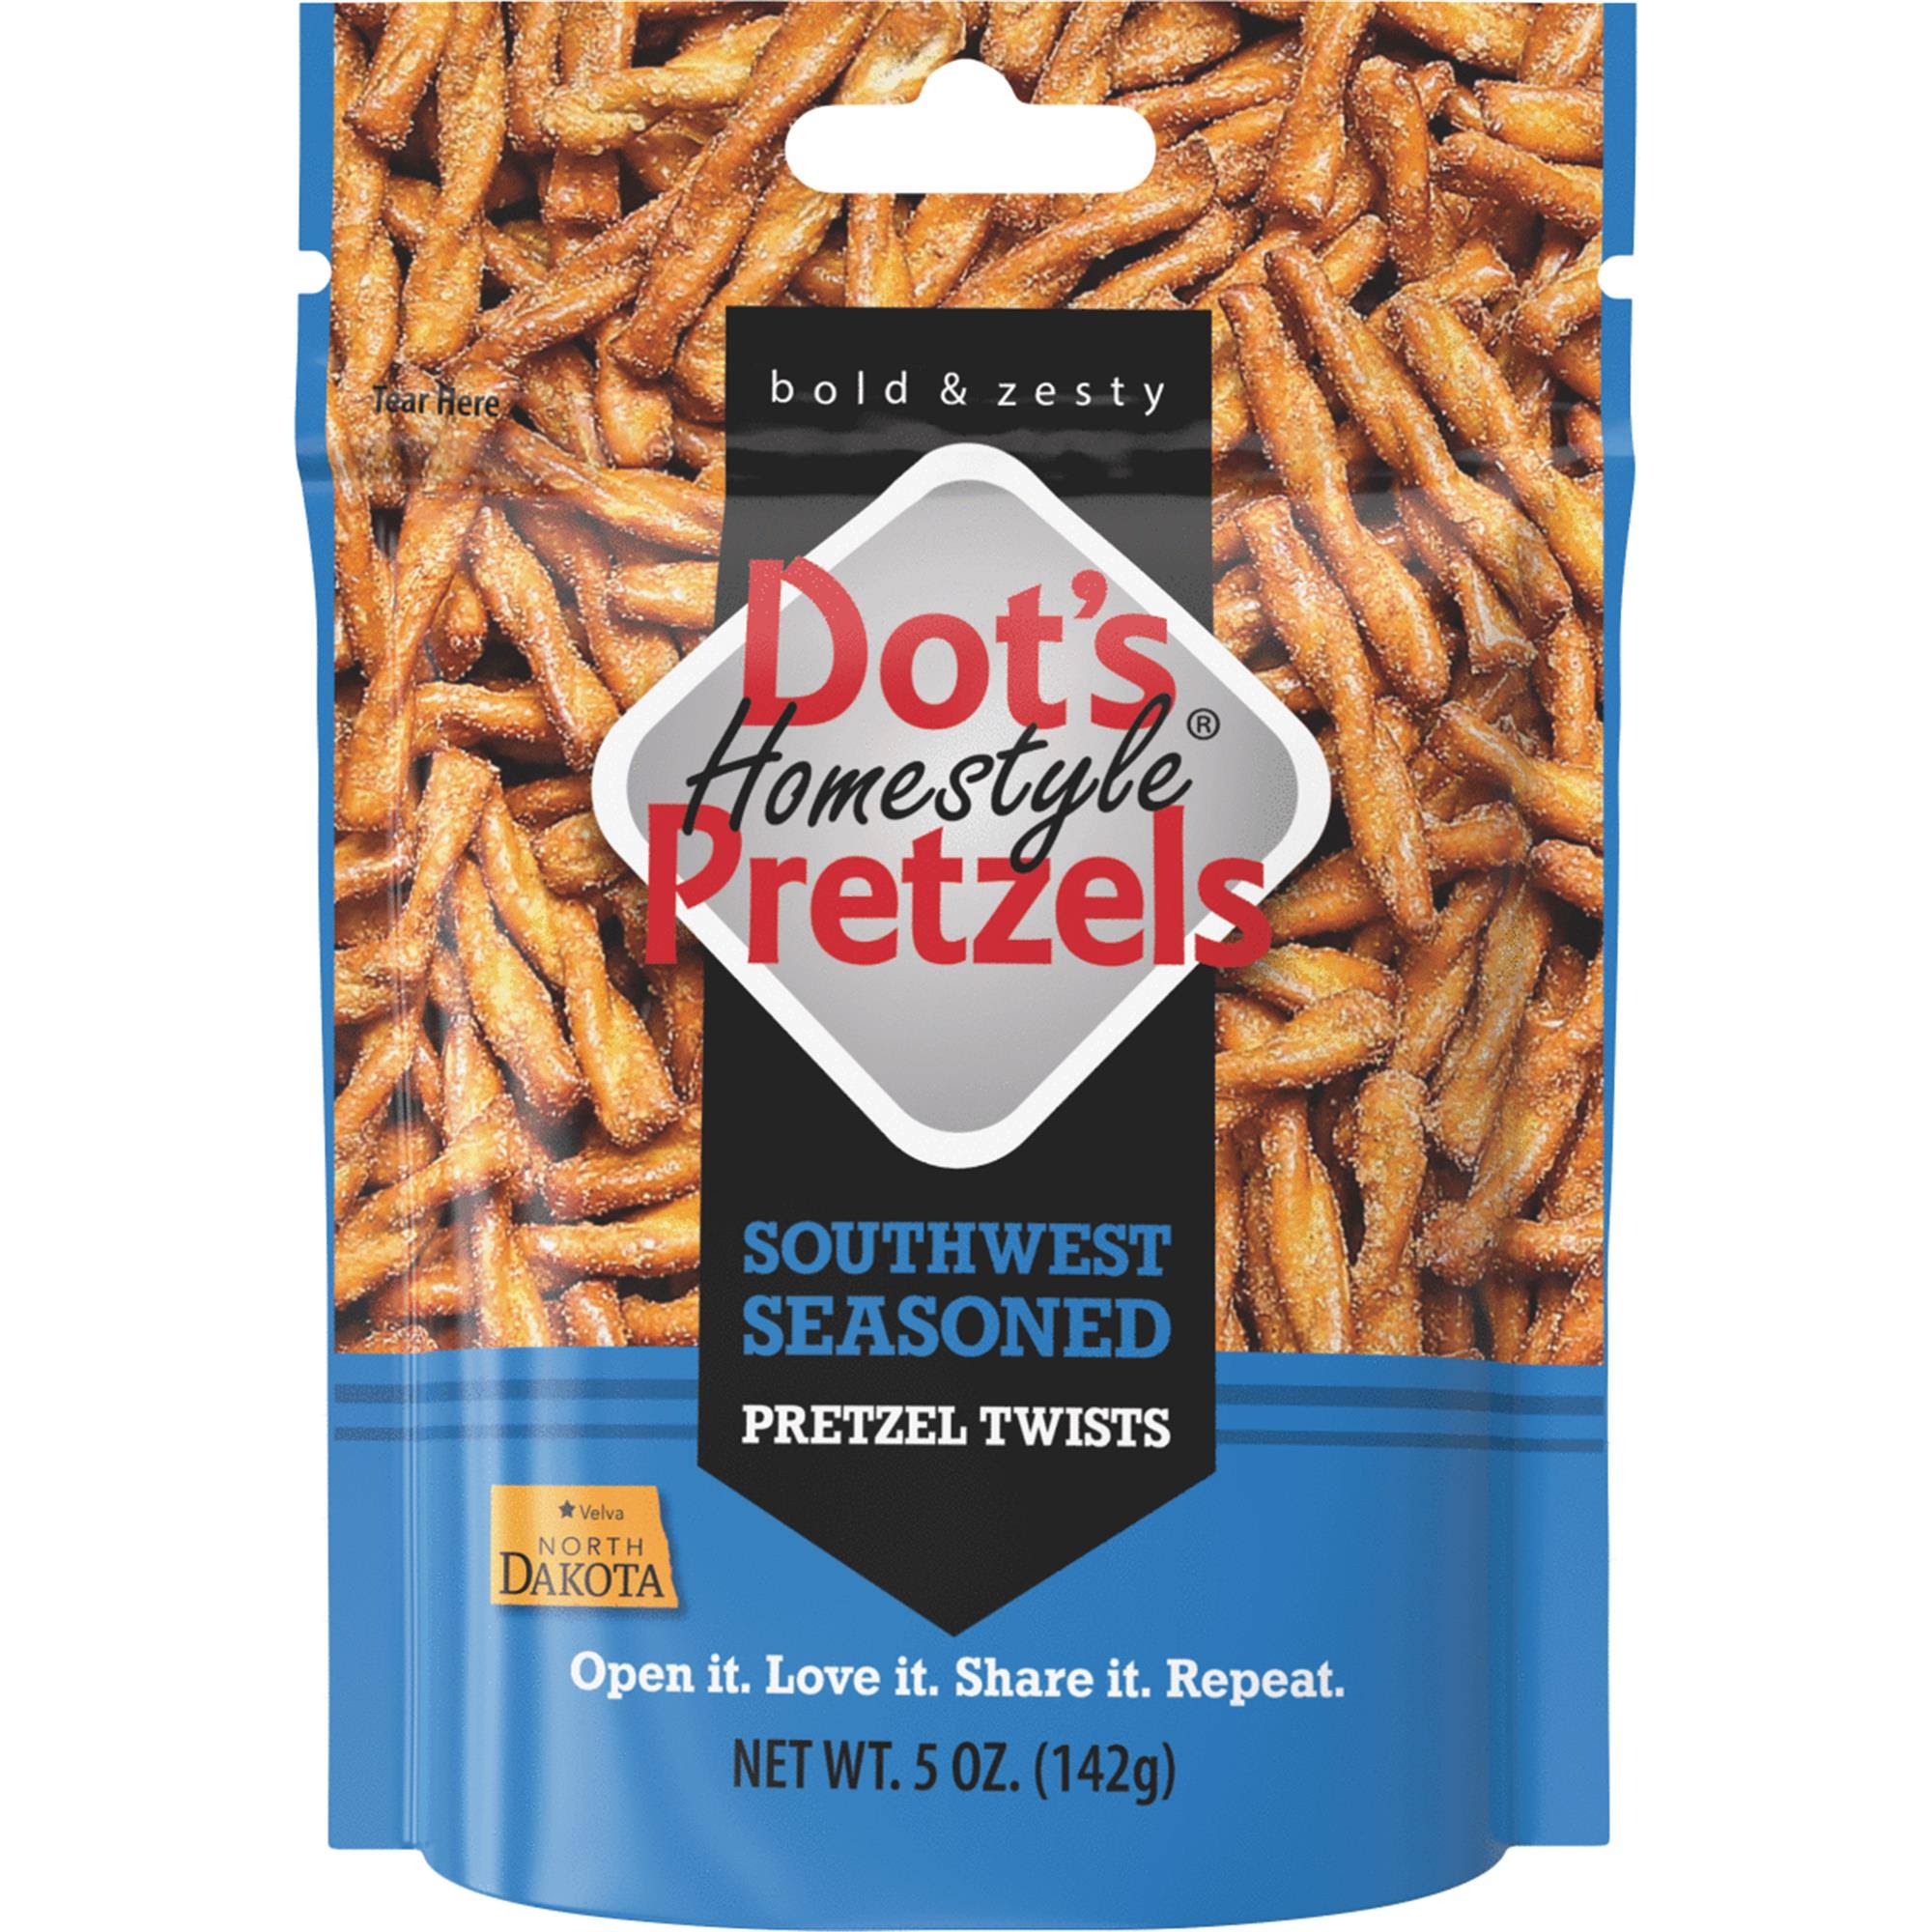 Dot's Pretzels Homestyle Pretzel Twists, Southwest Seasoned - 5 oz